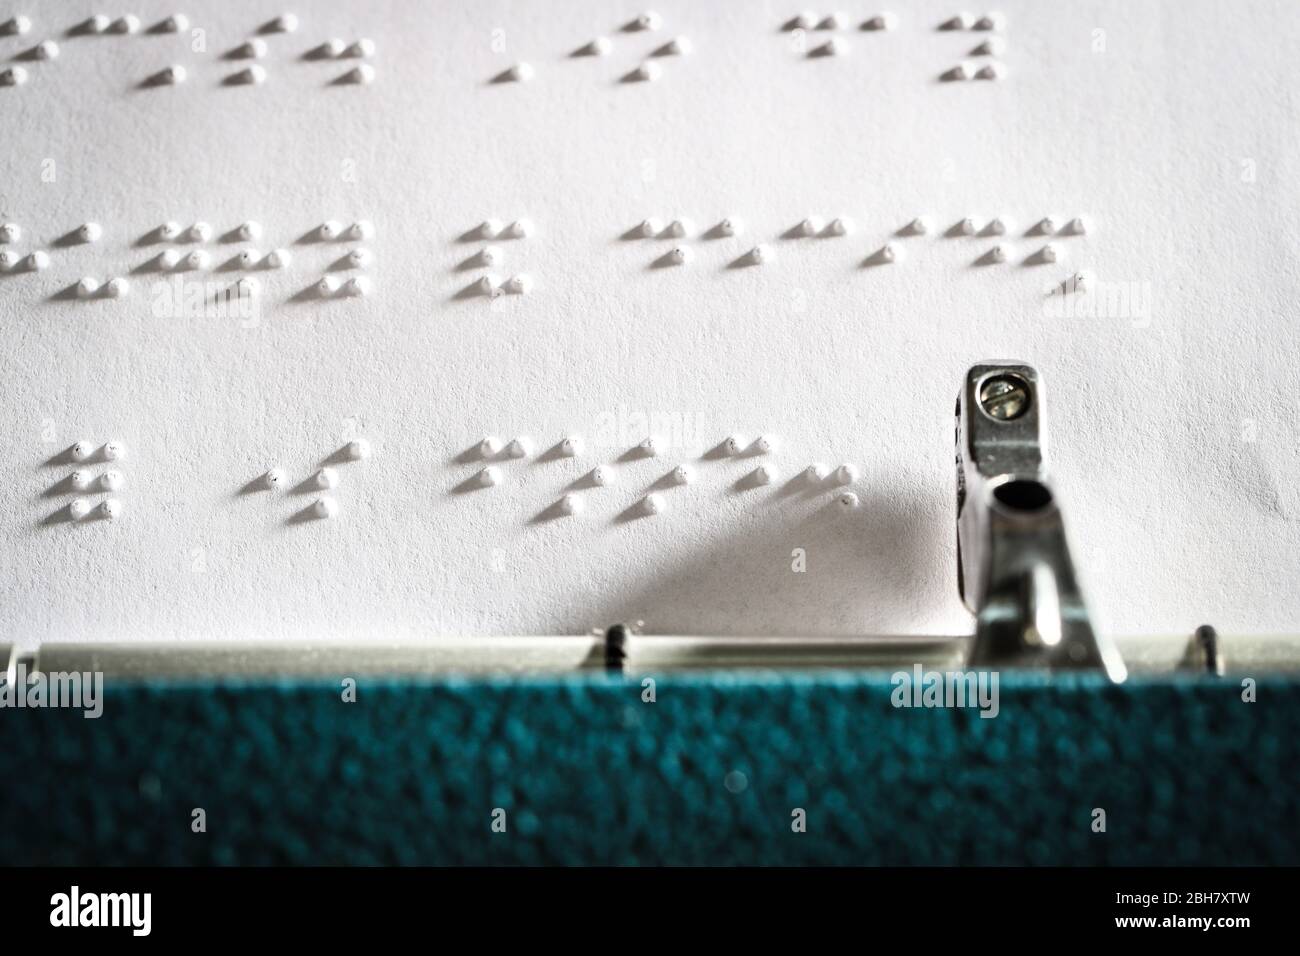 Braille being printed using a brailler typewriter Stock Photo